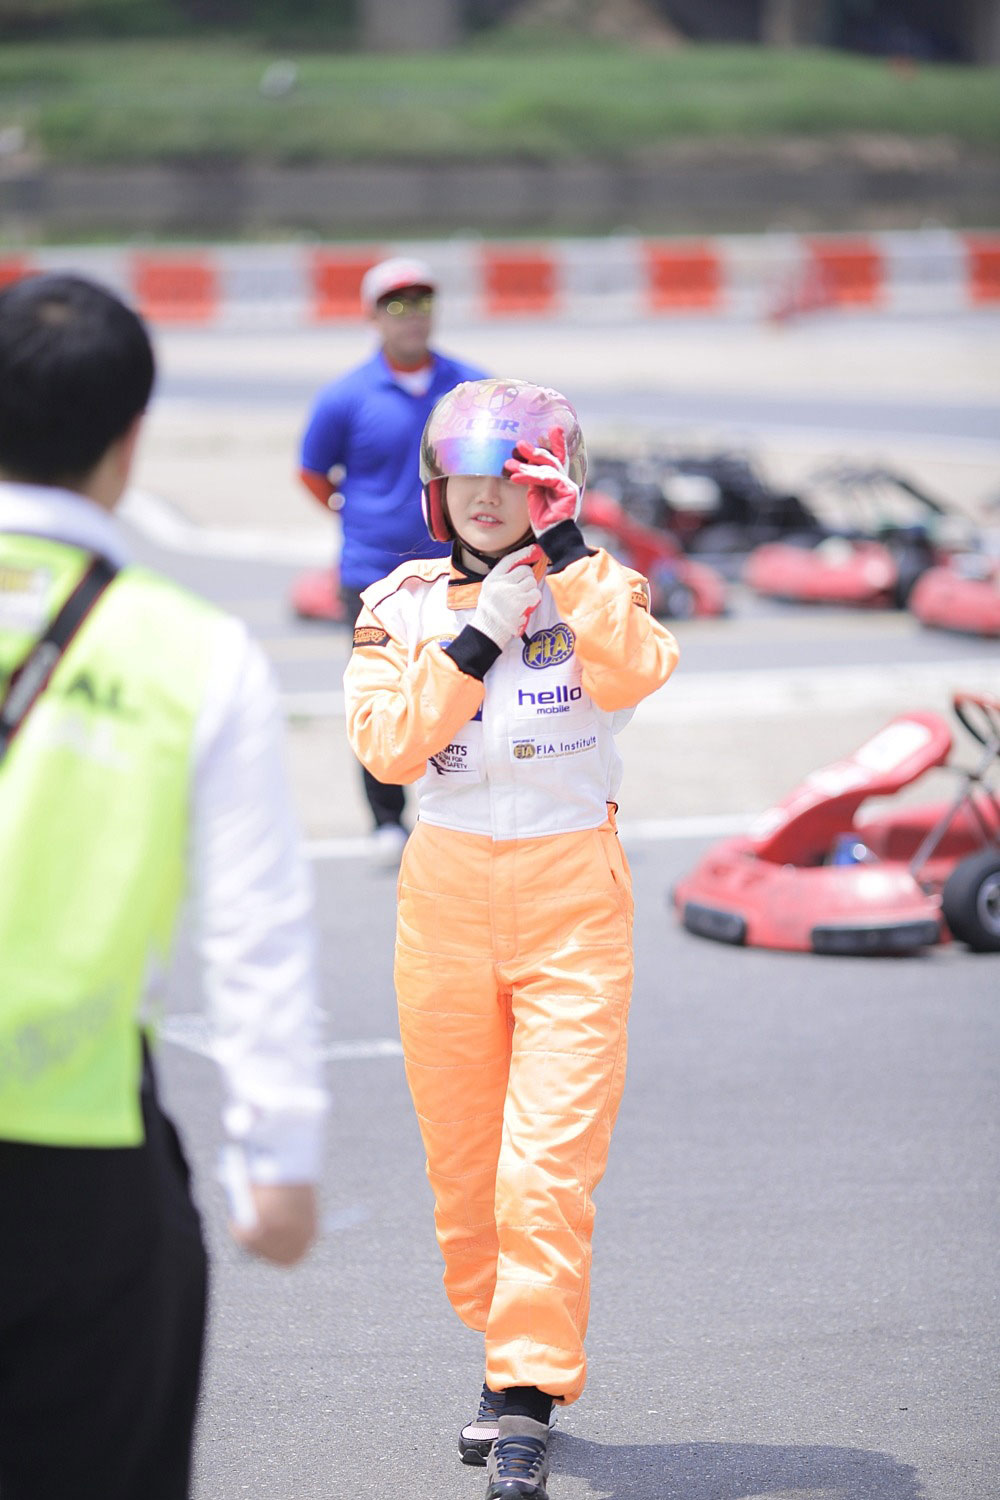 Korean Go Kart Racer Han Ga Eun